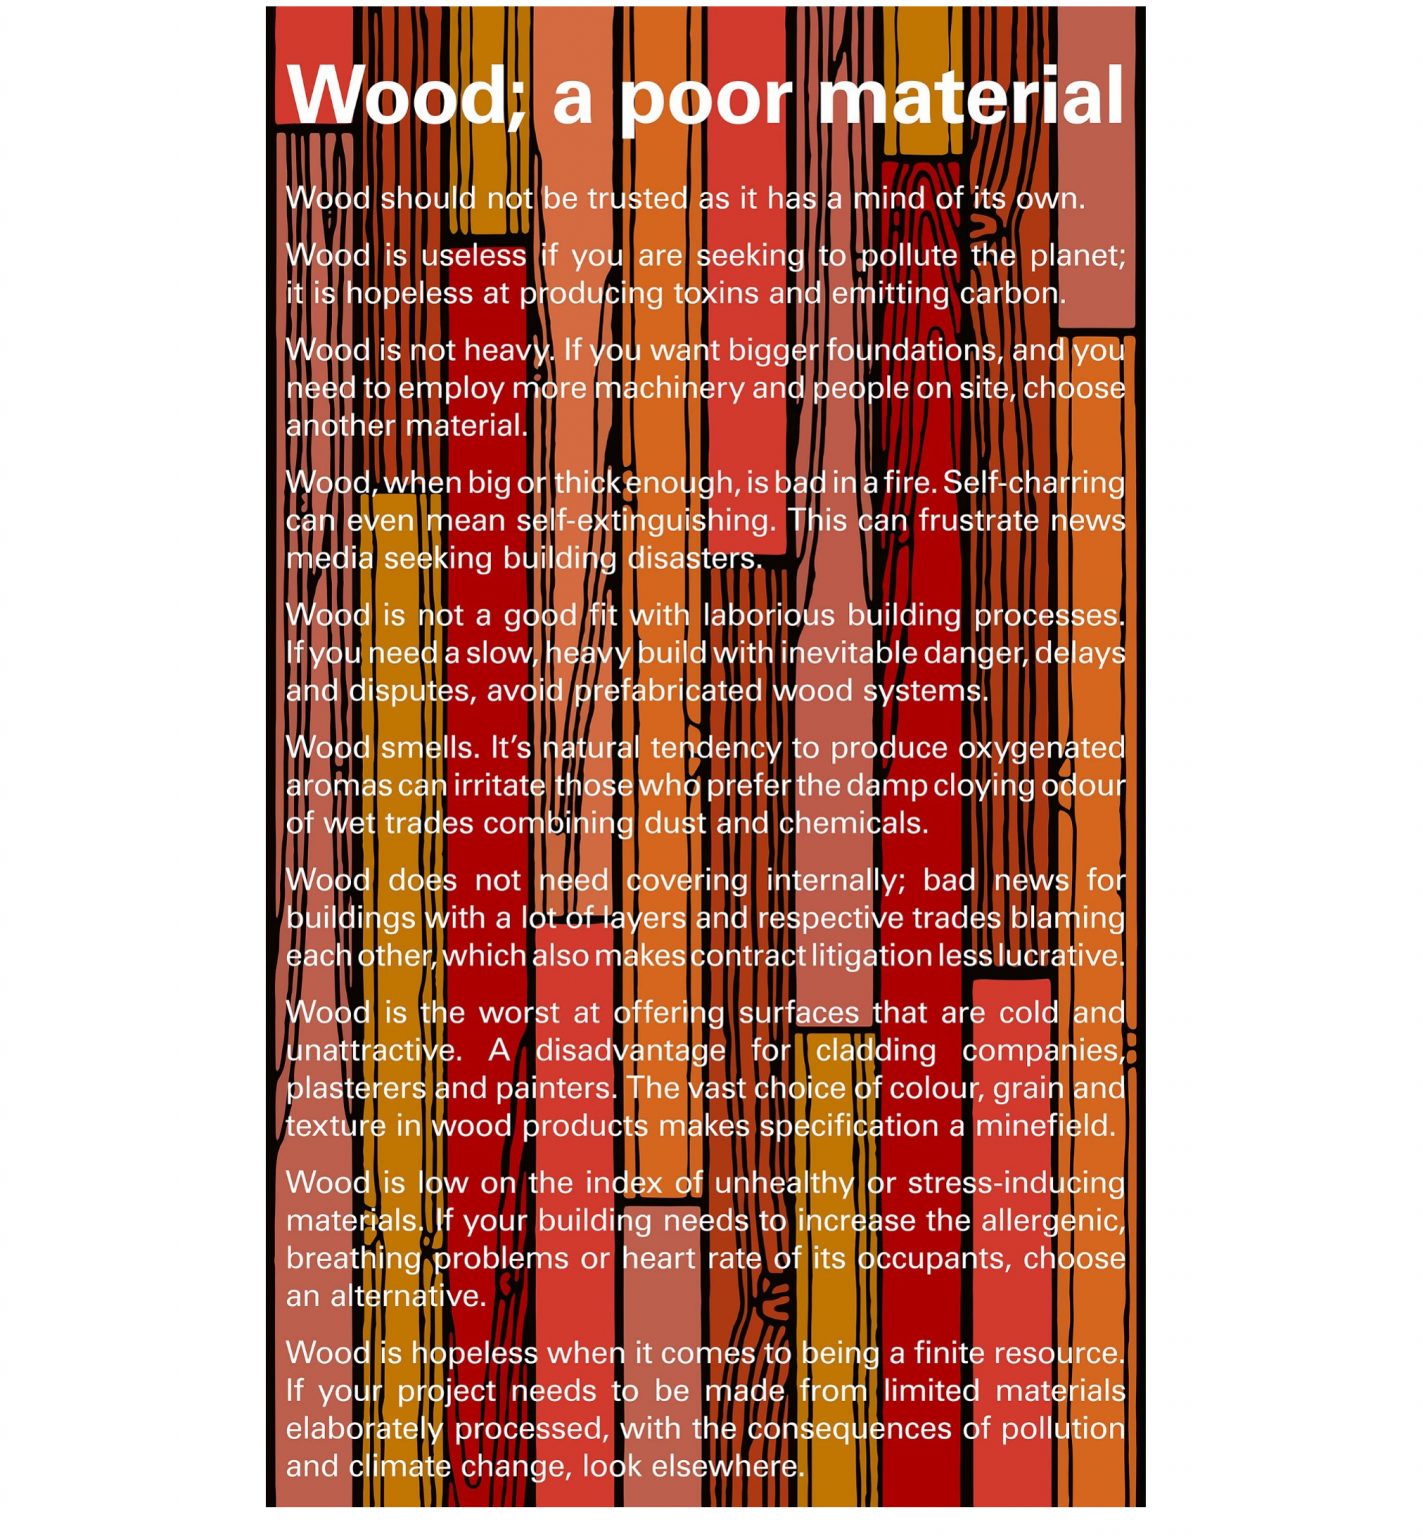 Timber manifesto by Alex de Rijke.